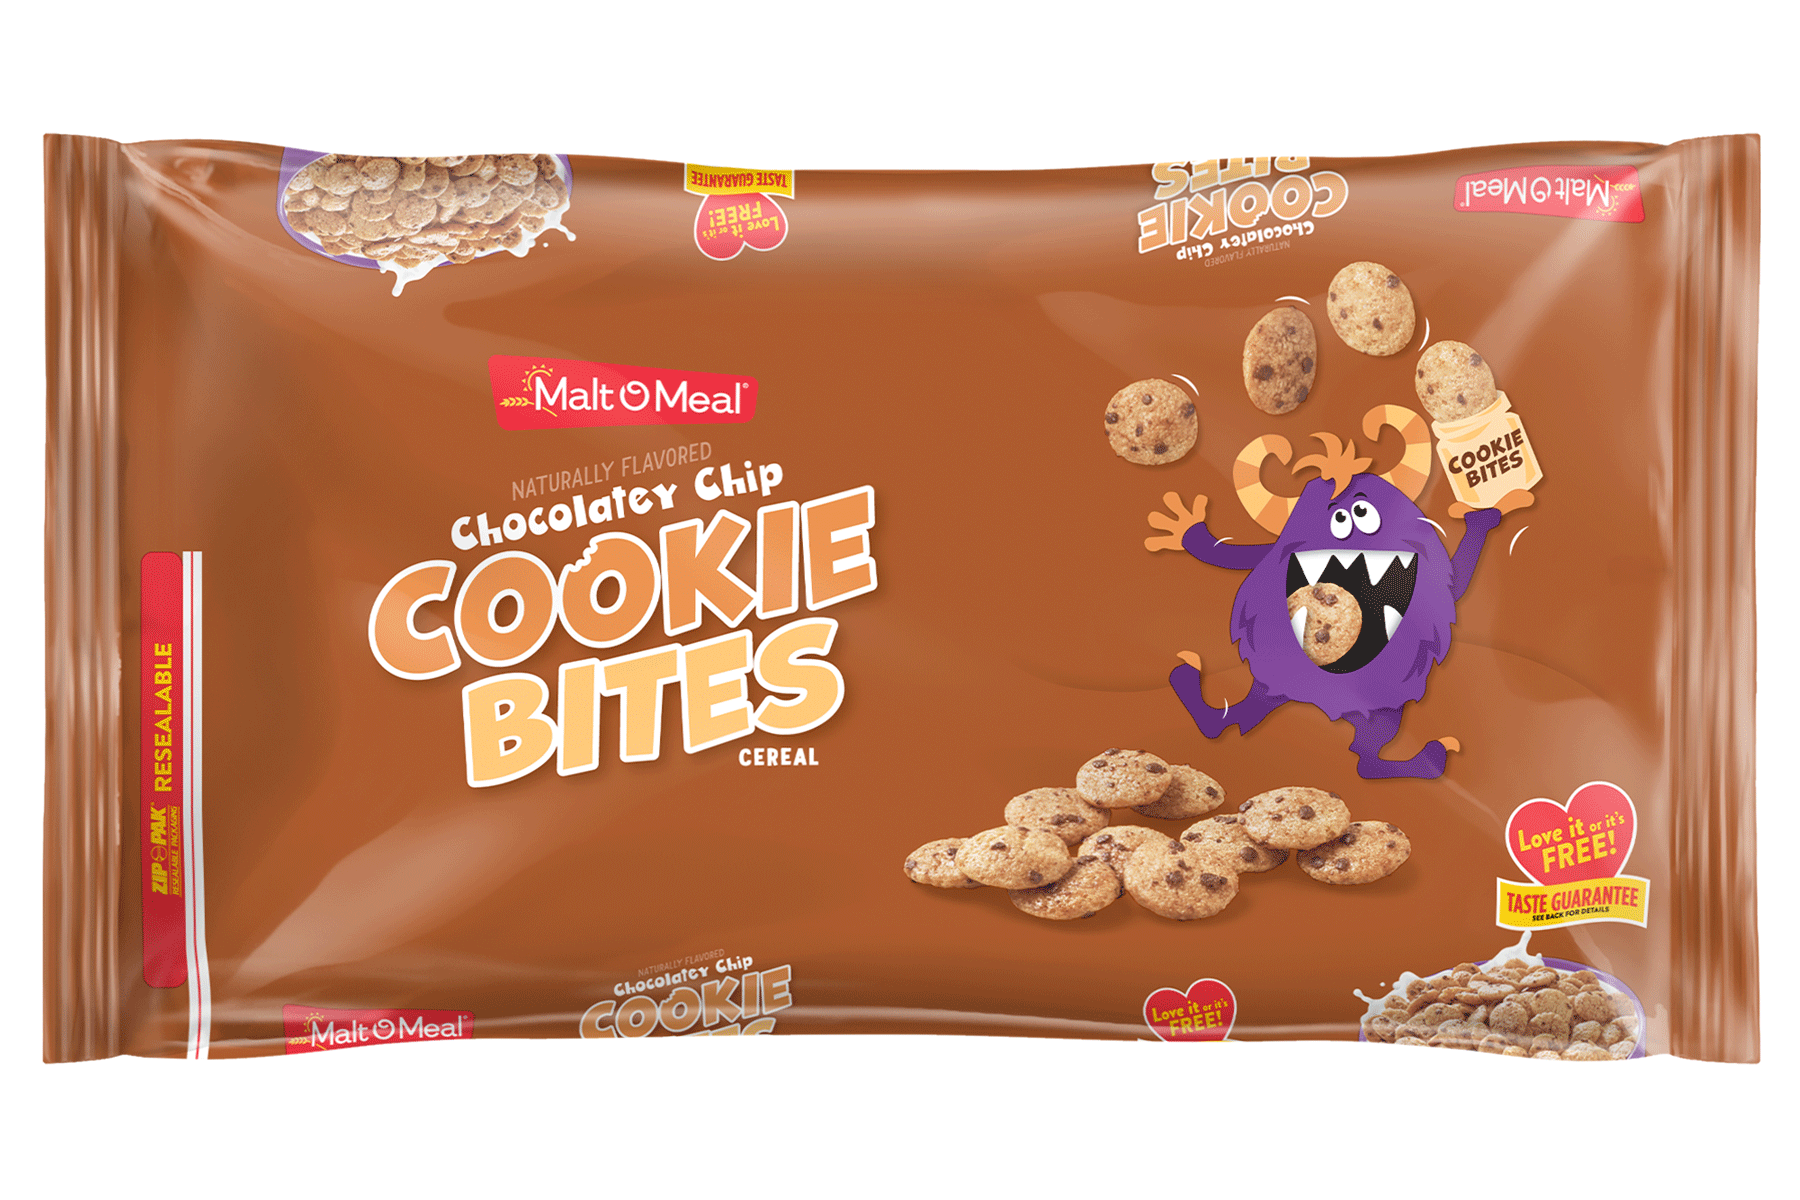 New Malt-O-Meal Chocolatey Chip Cookie Bites Cereal Bag